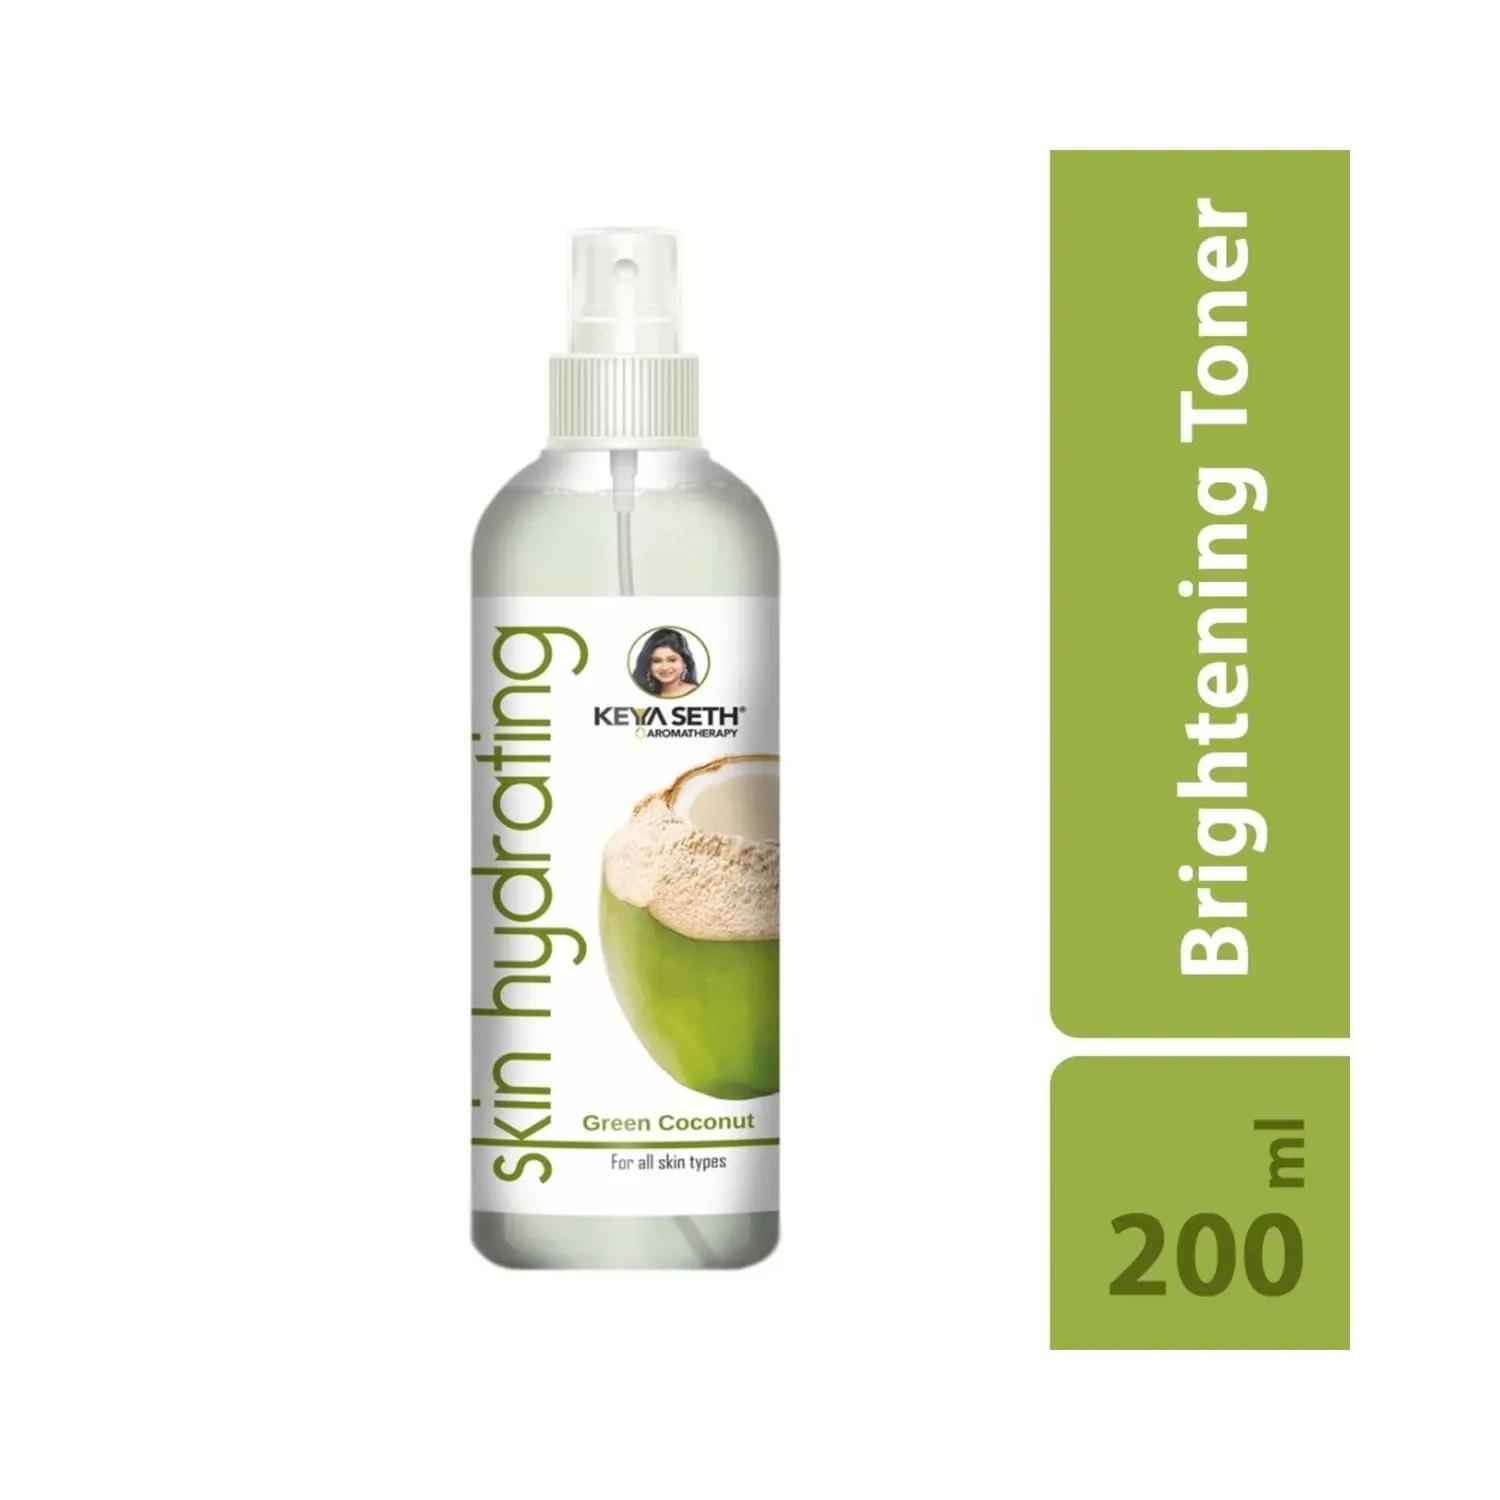 keya seth aromatherapy skin hydrating green coconut toner (200ml)